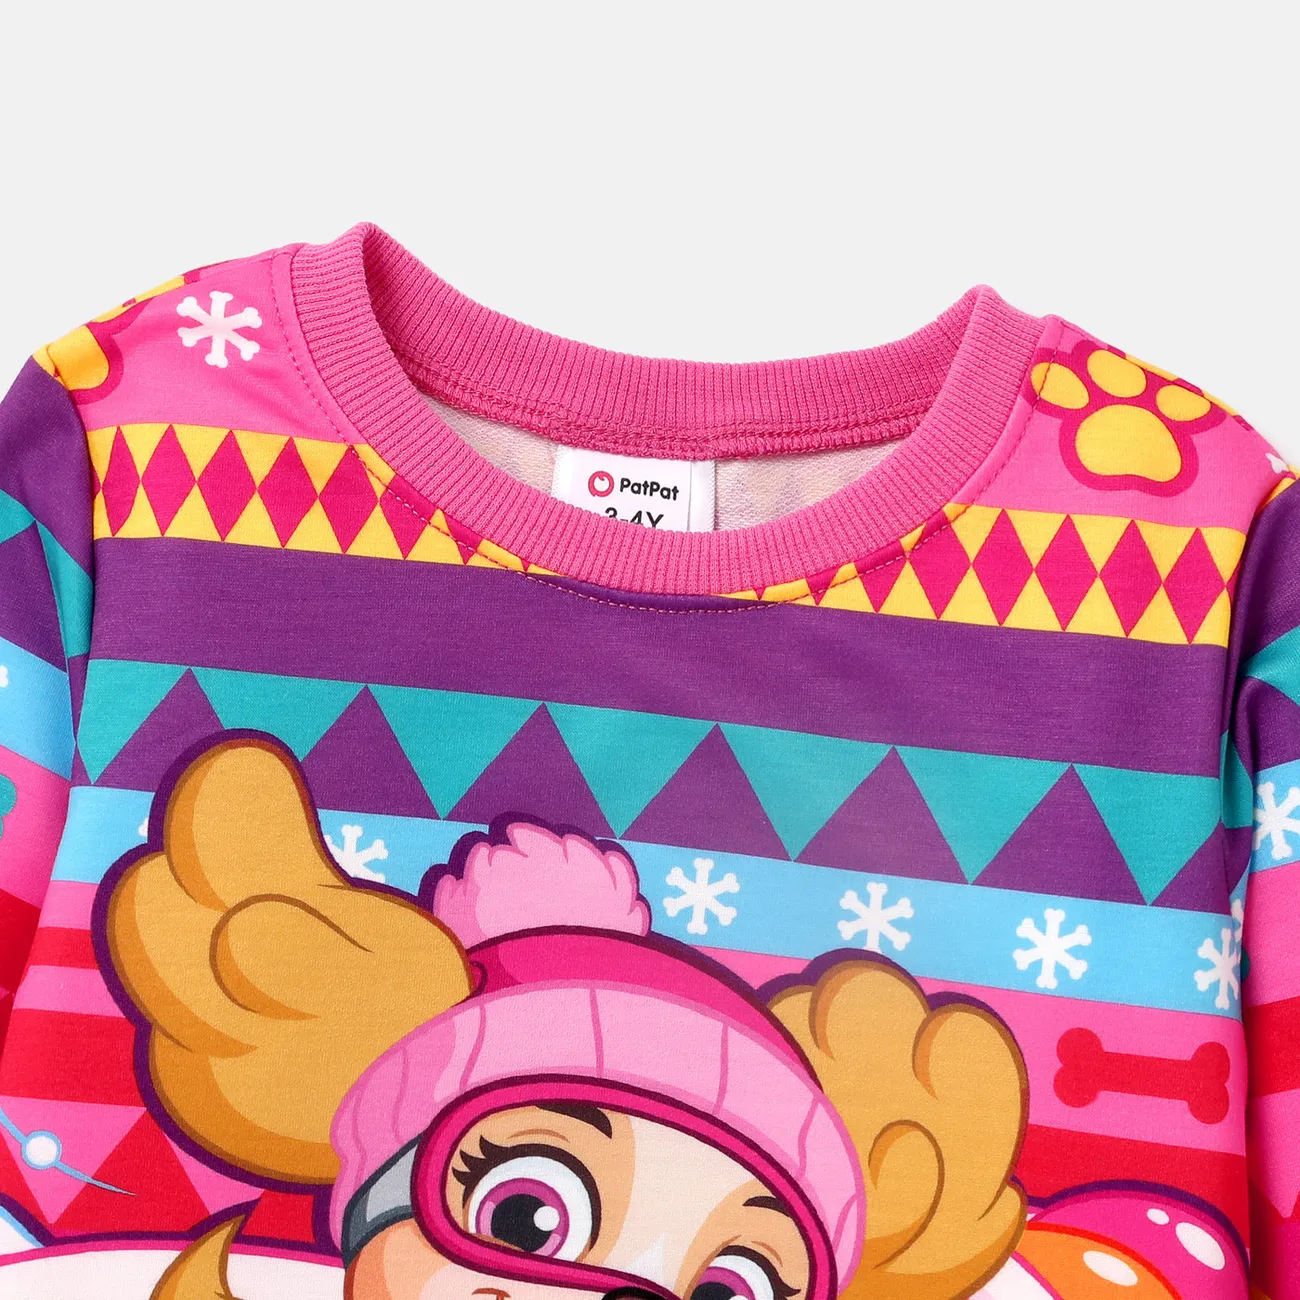 PAW Patrol Toddler Girl/Boy Character Print Long-sleeve Pullover Sweatshirt Pink big image 1